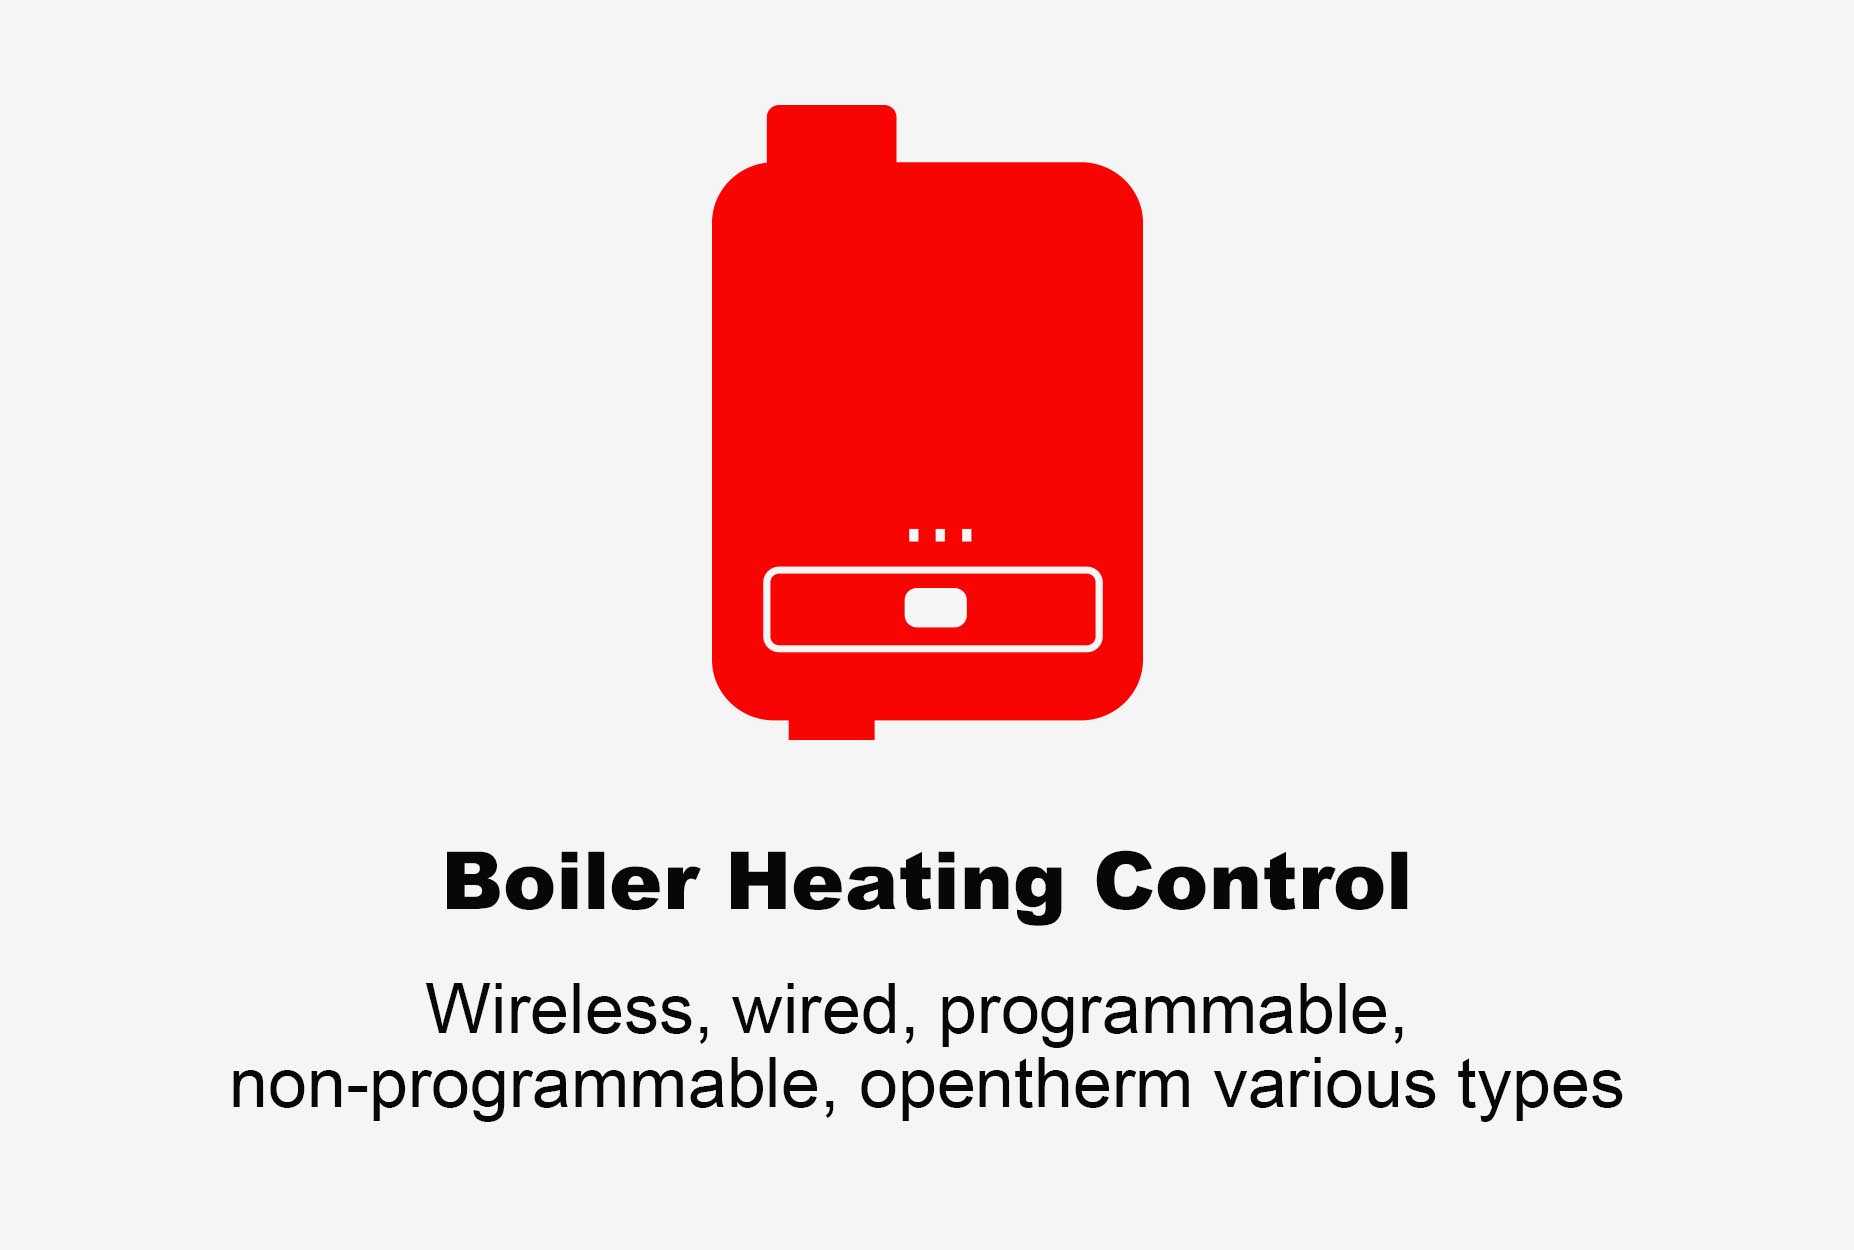 termostato filare, termostato wireless, termostato caldaia wifi, cronotermostato, termostato alimentazione a batteria, termostato opentherm